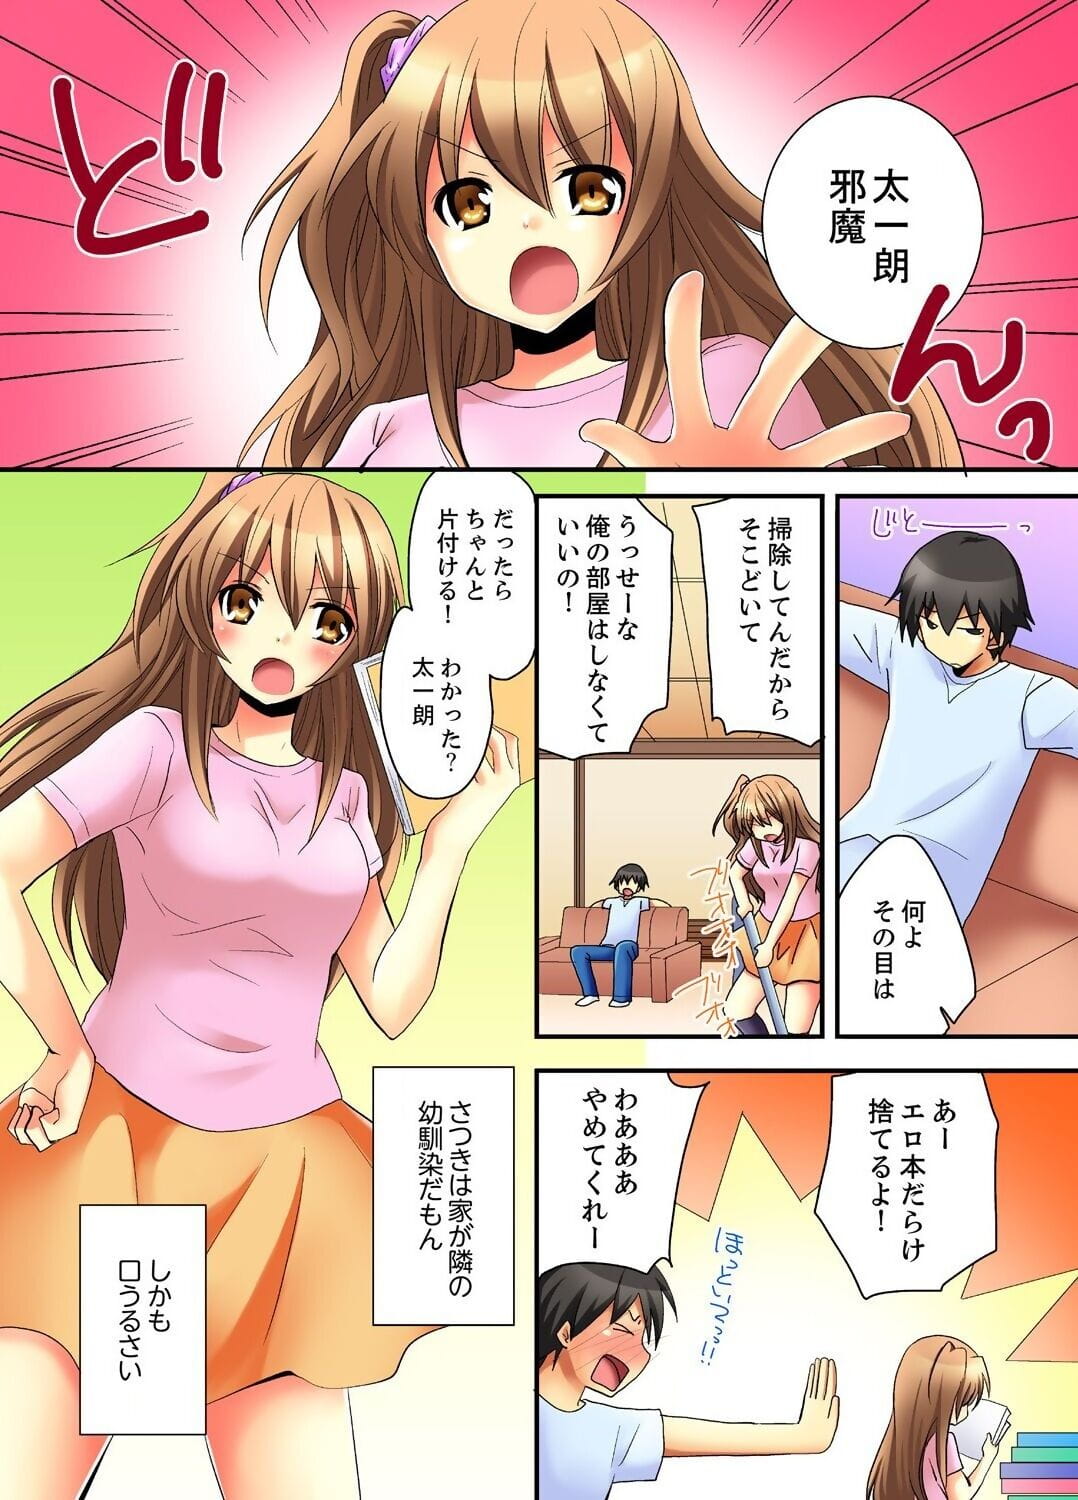 kanjiyasui osanajimi करने के लिए saimi h!? page 1